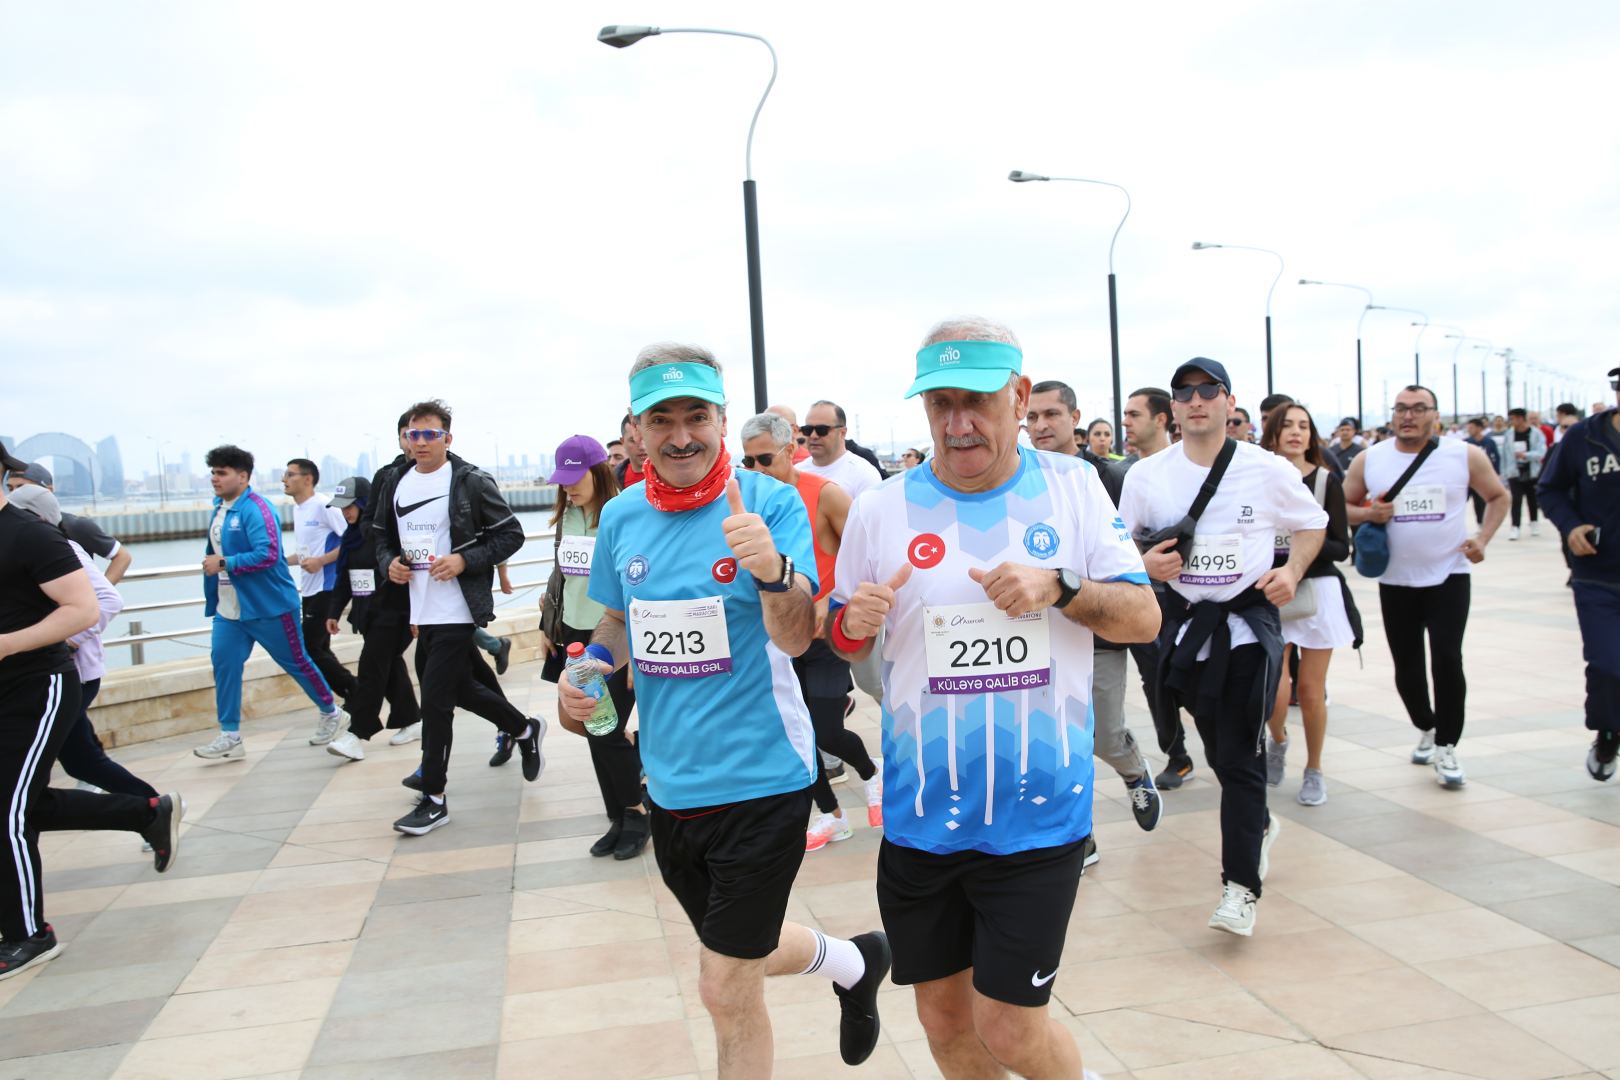 Sports festival: "Defeat the wind" Marathon in Baku (PHOTO)